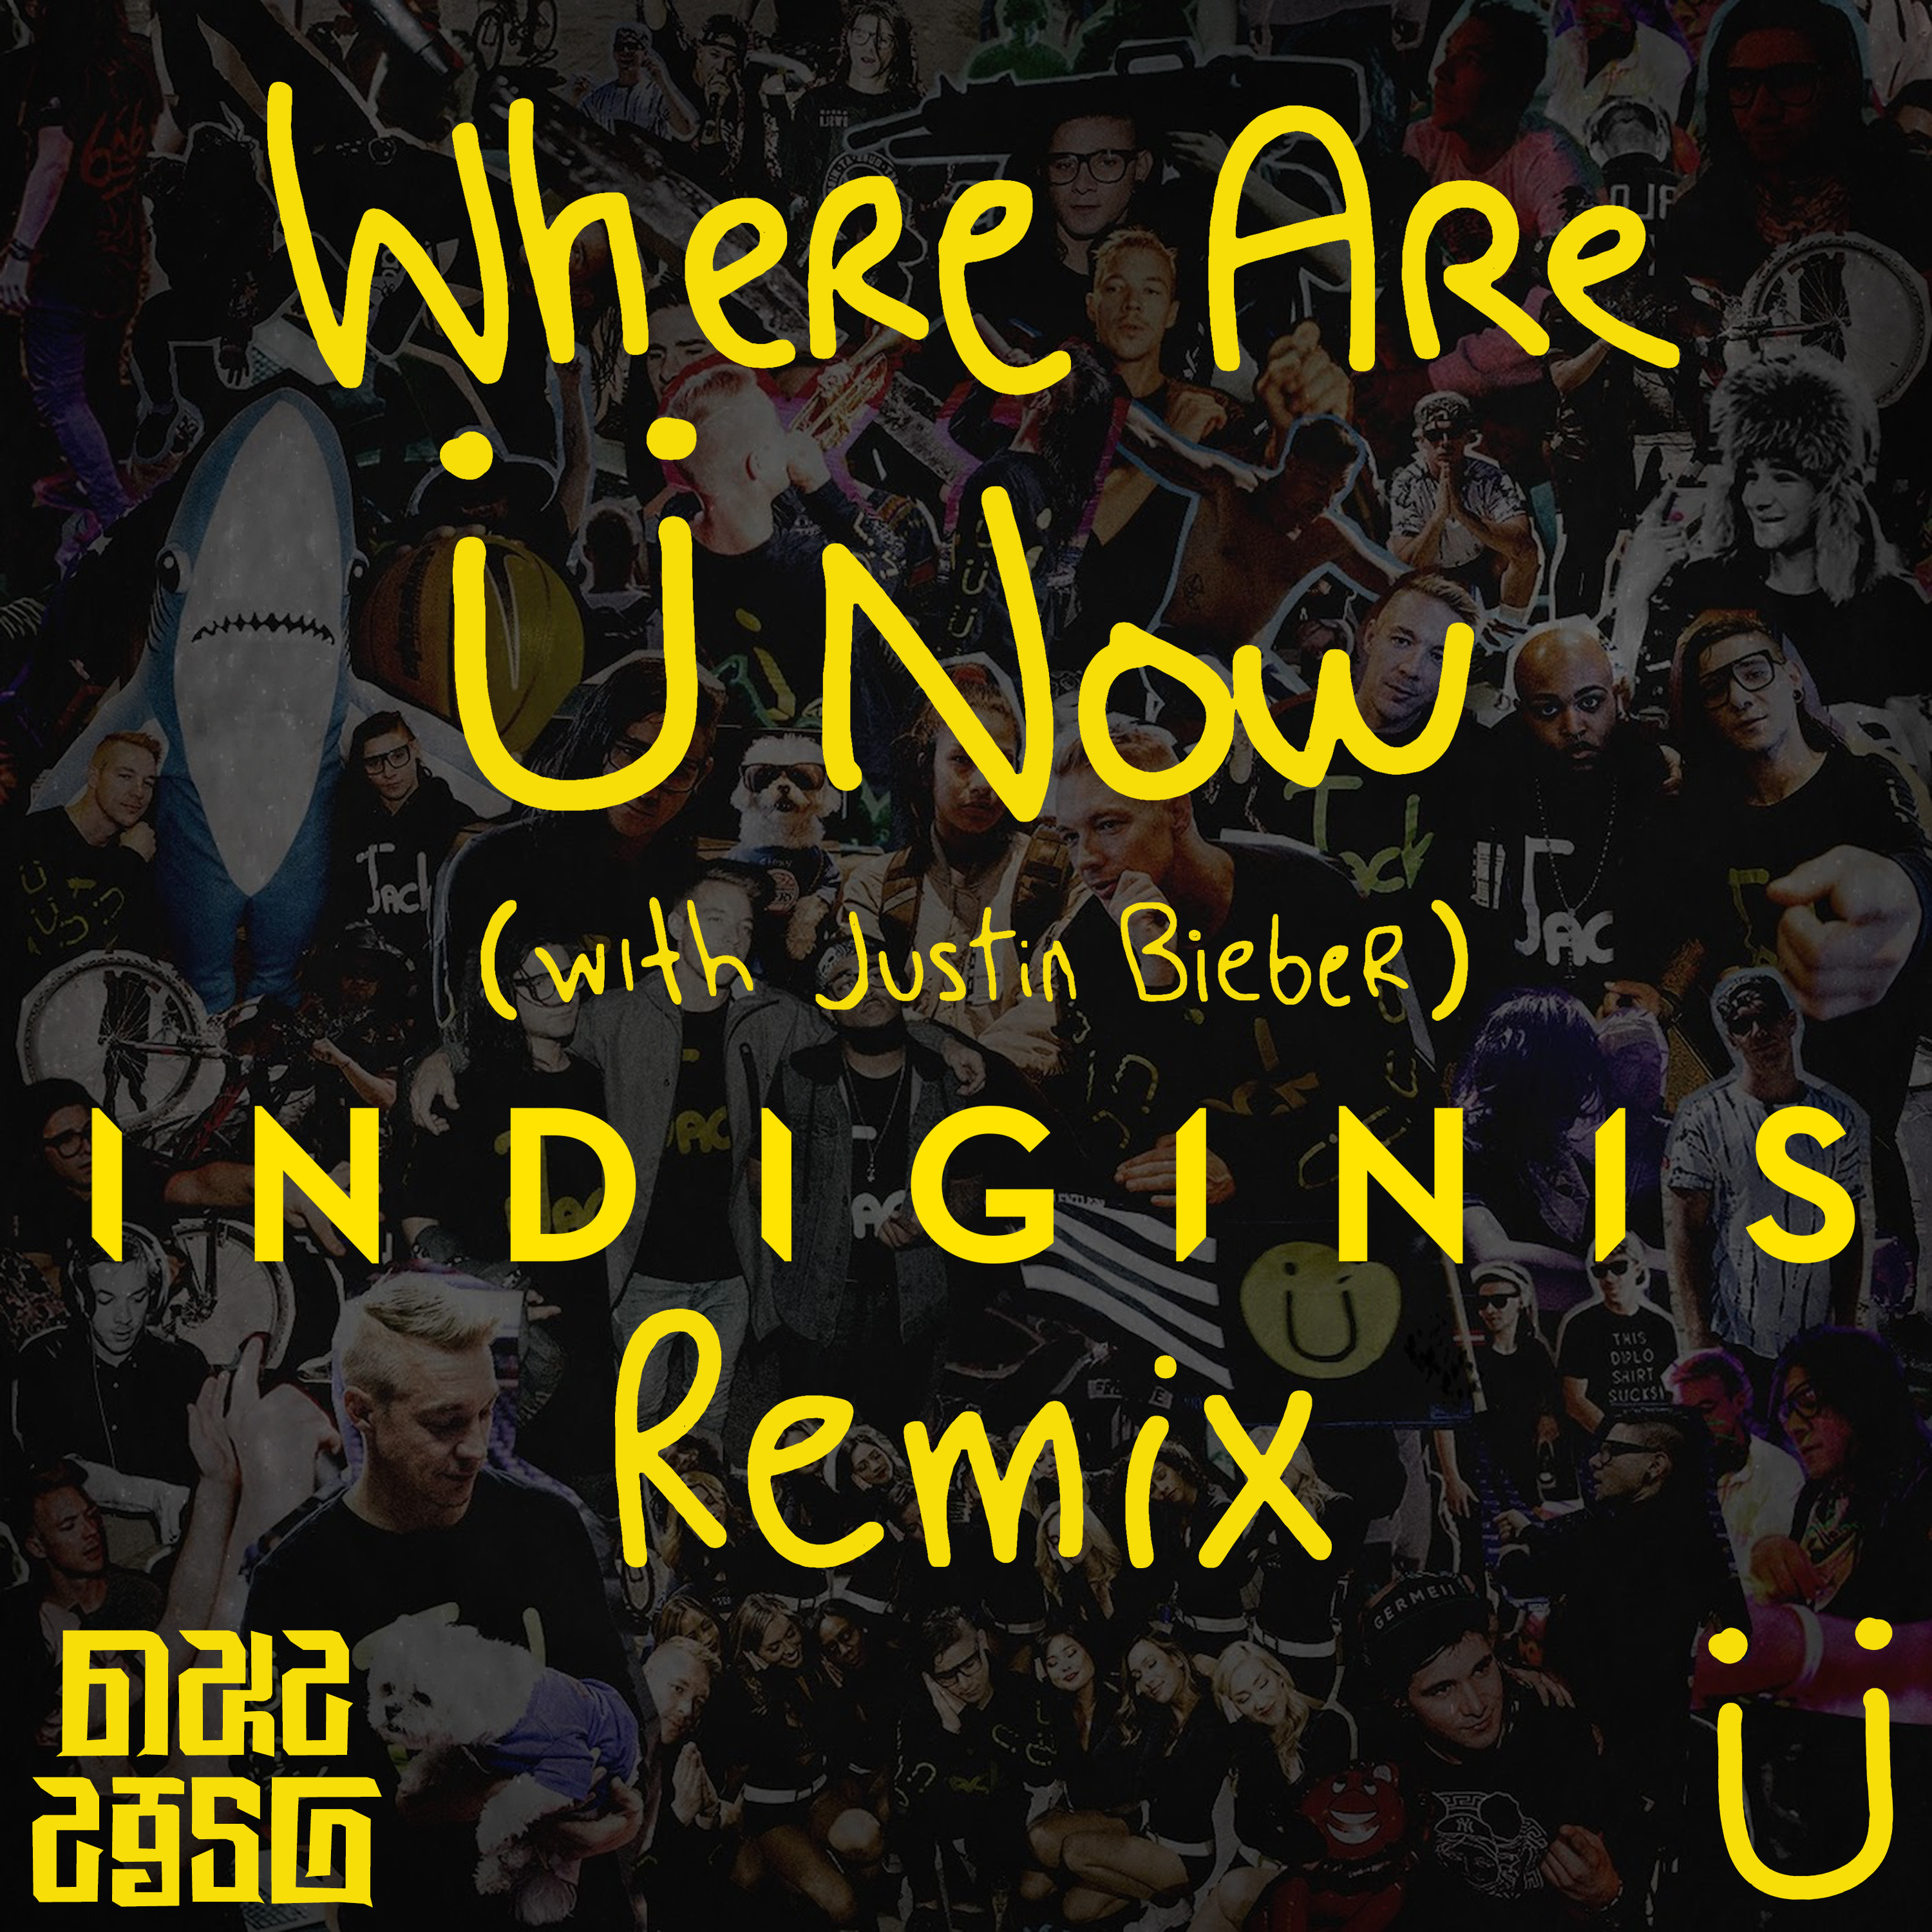 PREMIERE: Jack Ü - Where Are Ü Now (Indiginis Remix)